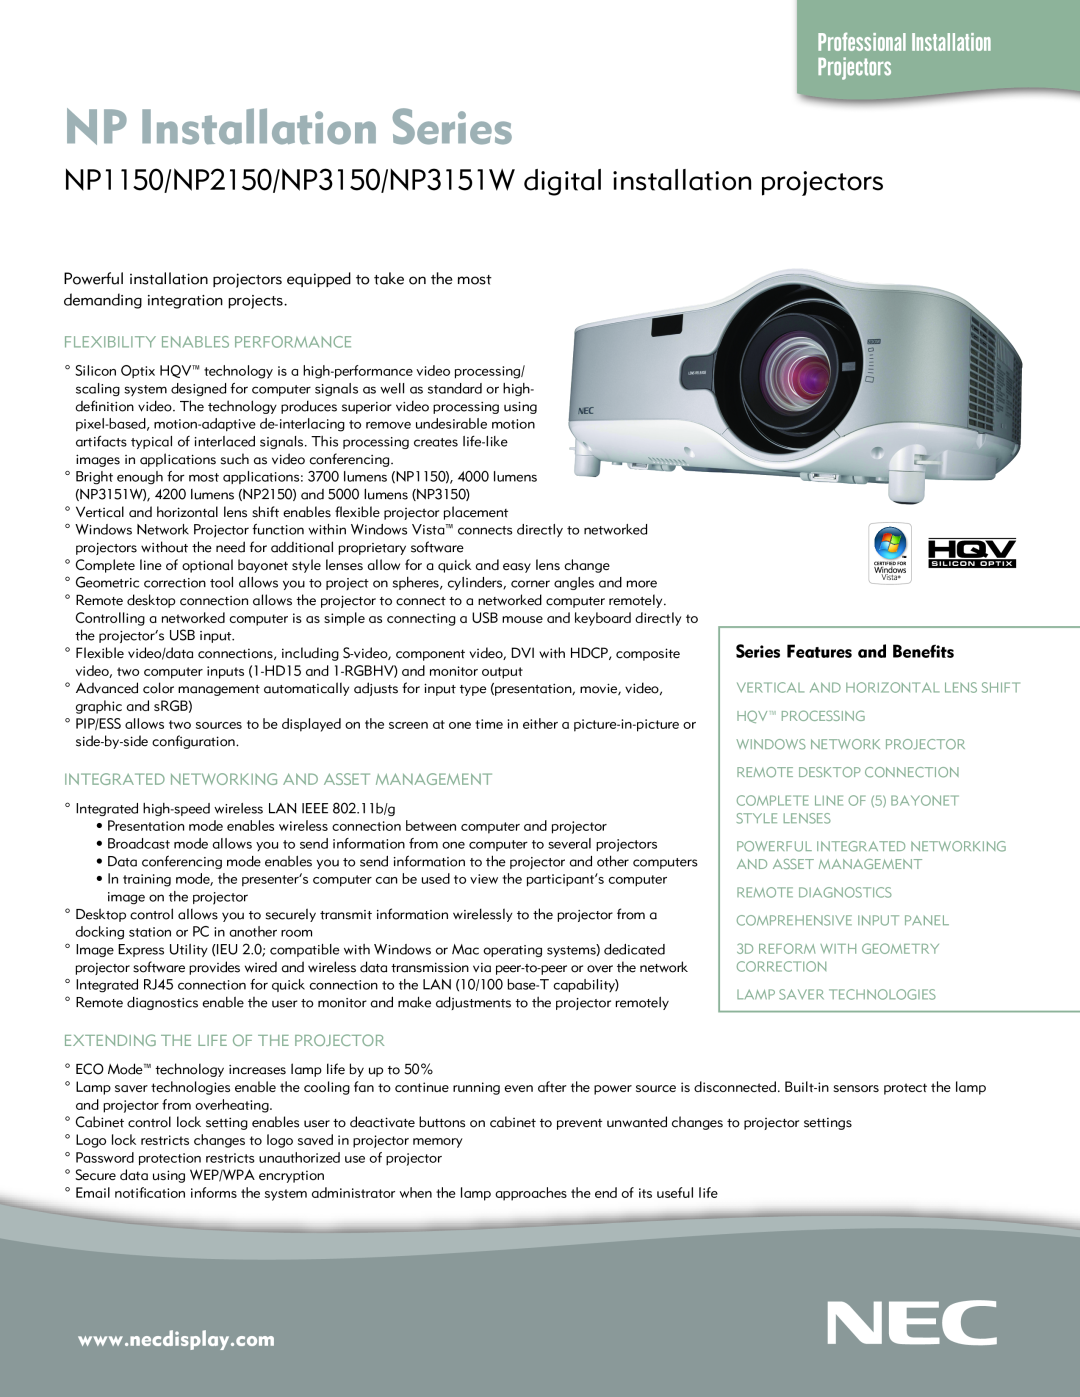 NEC manual NP Installation Series, NP1150/NP2150/NP3150/NP3151W digital installation projectors 